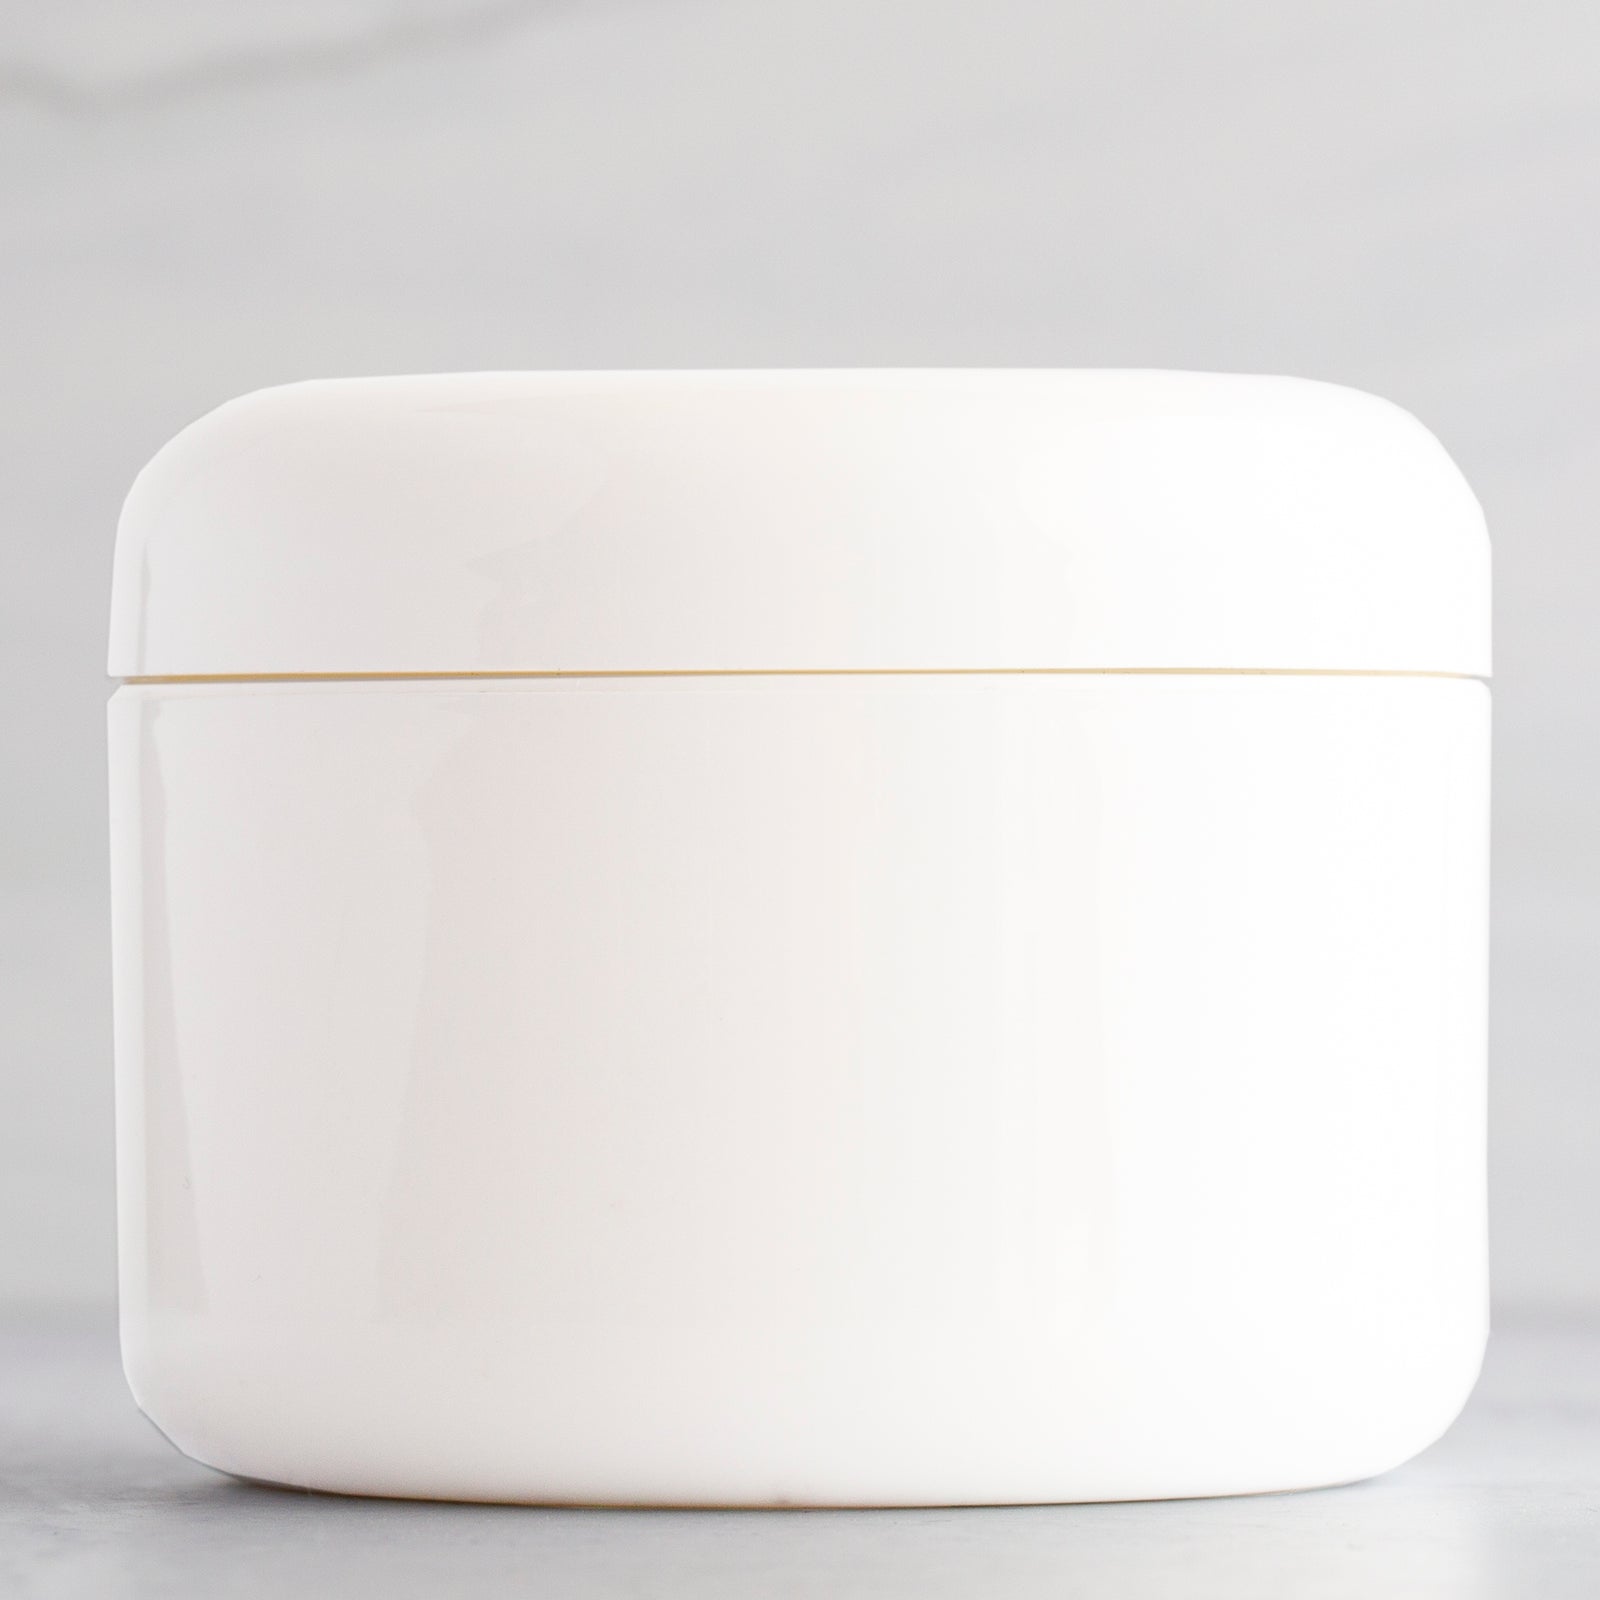 8 oz White Round Base Plastic Jar with White Dome Cap